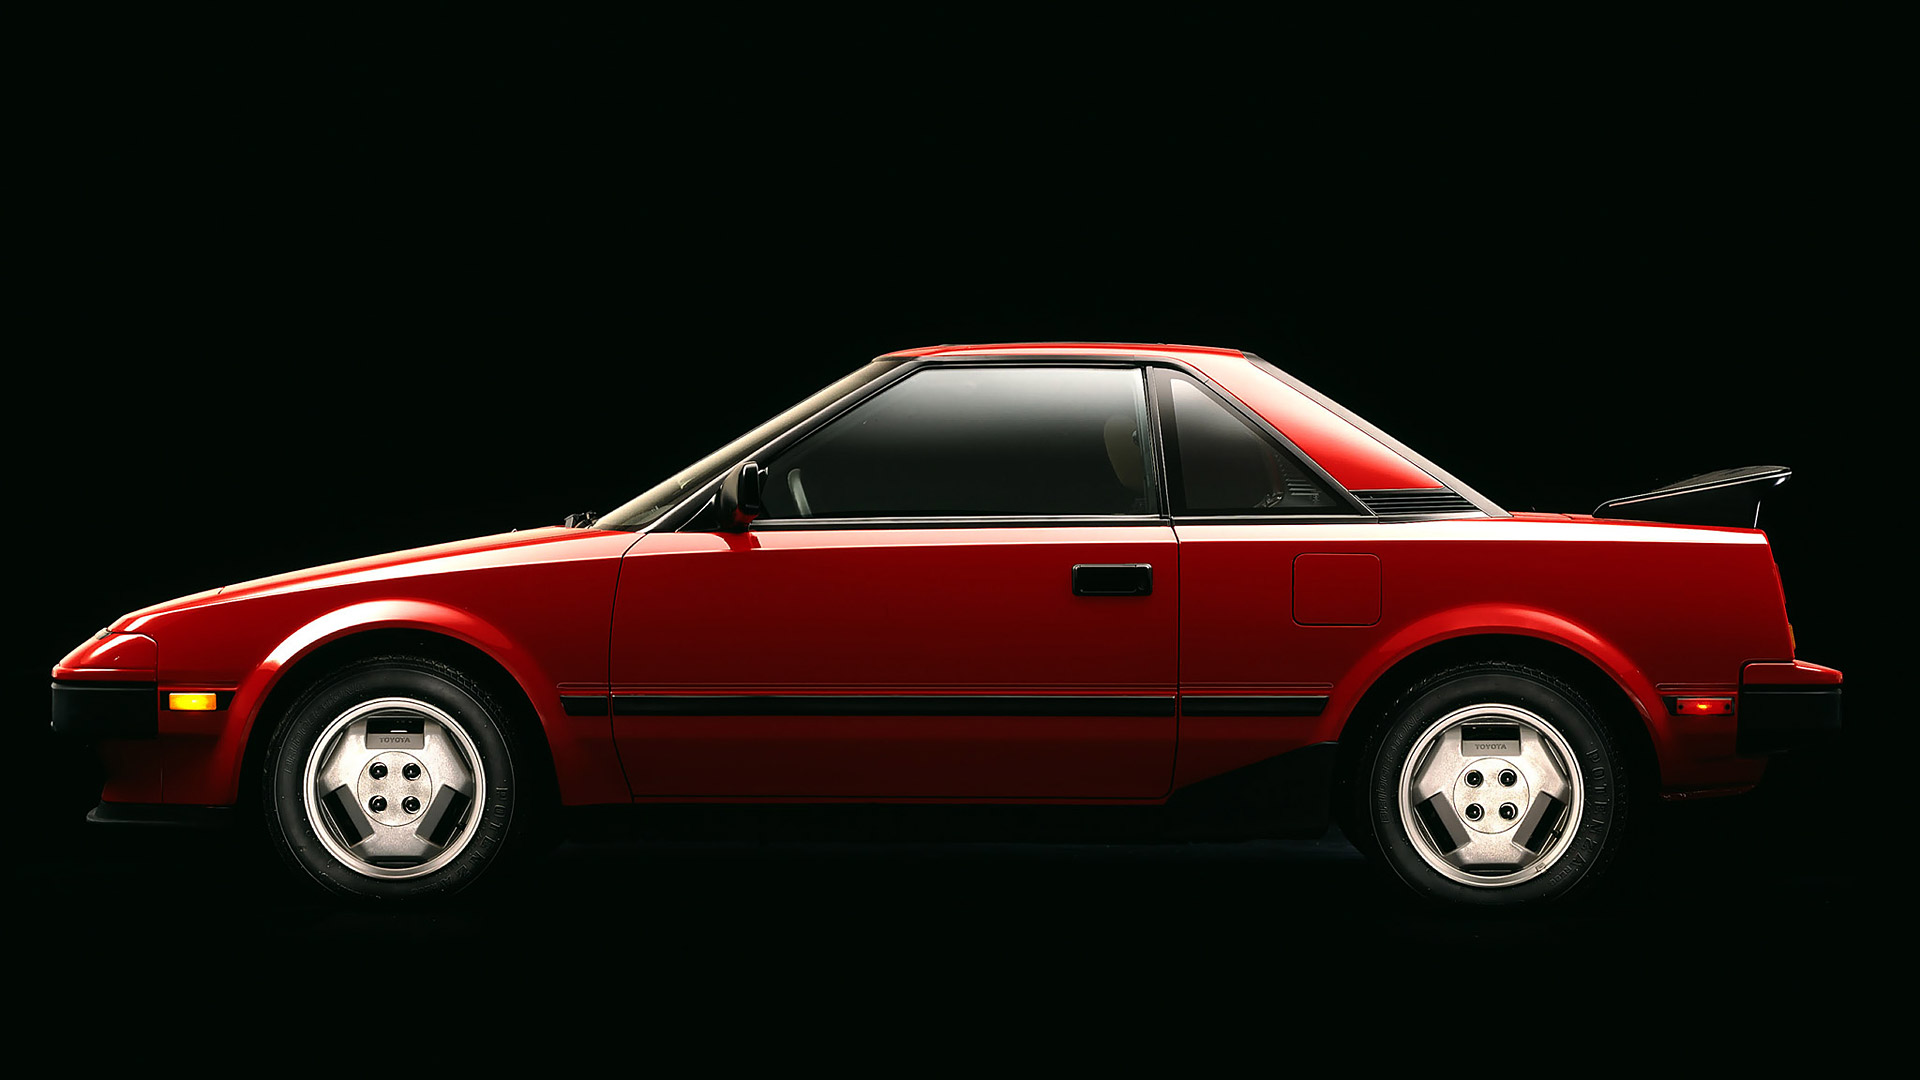  1985 Toyota MR2 Wallpaper.